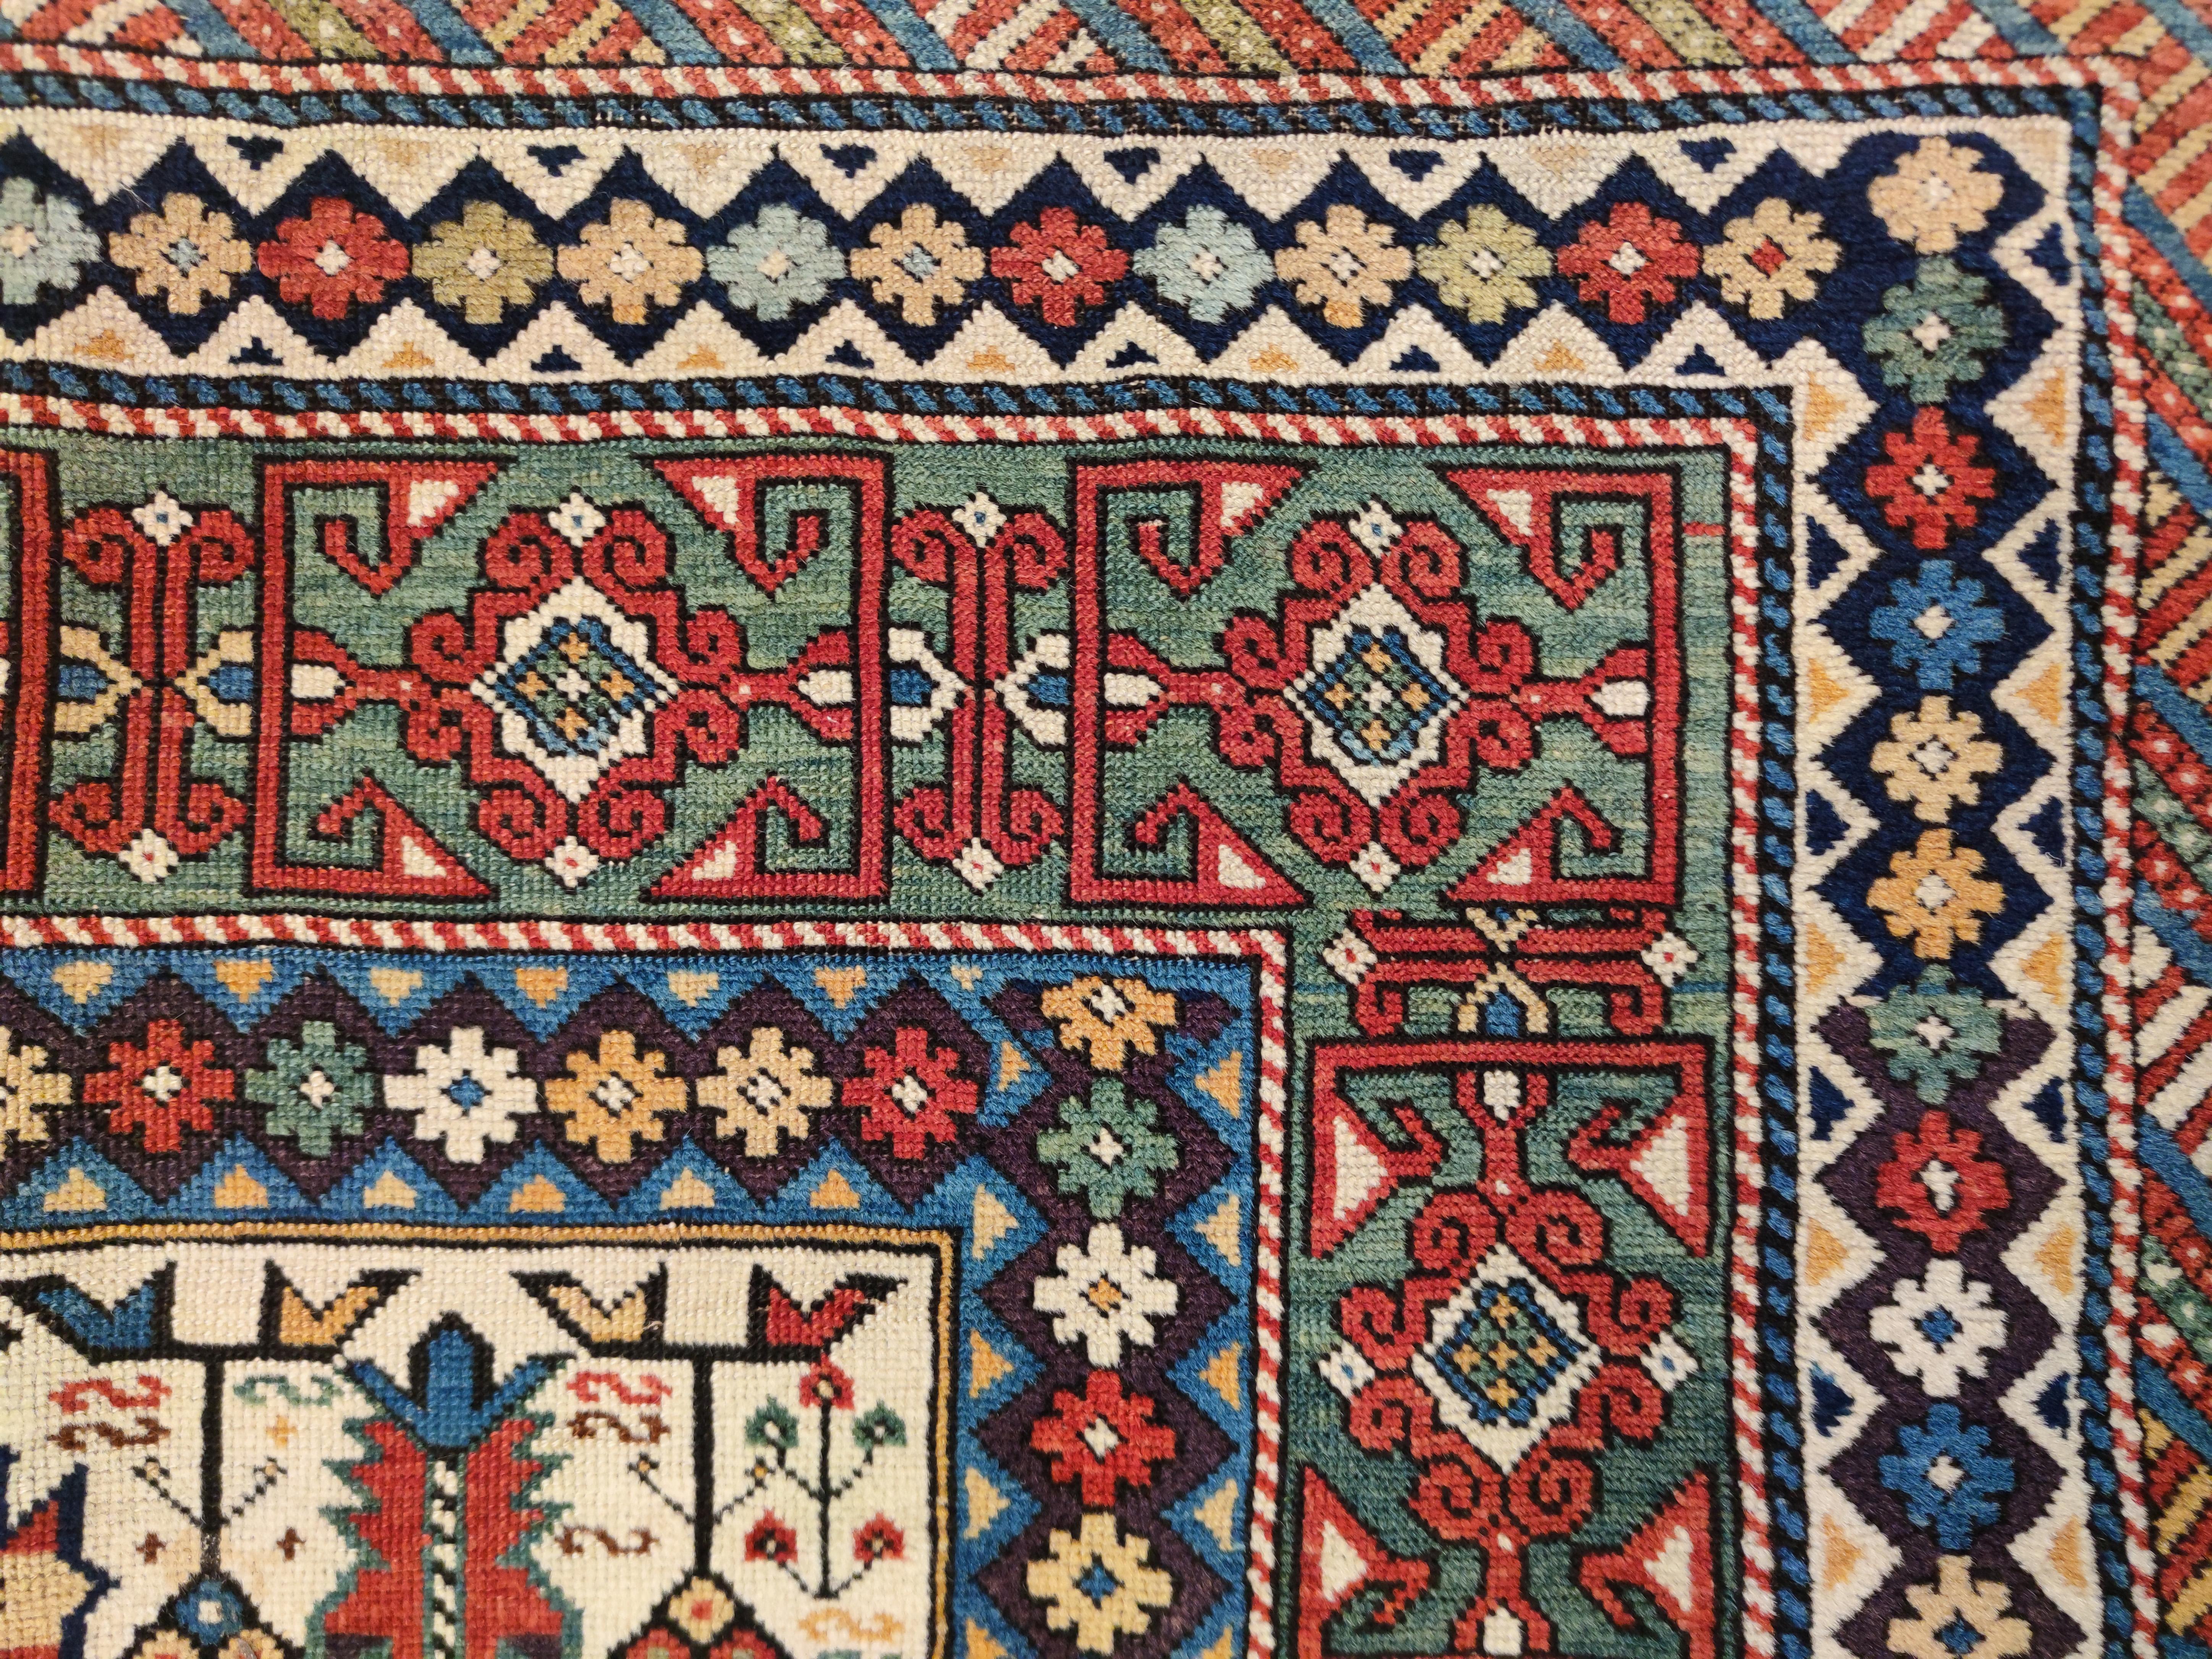 Kazak Early and Rare Antique White Ground Kuba Chi-Chi Caucasian Rug   For Sale